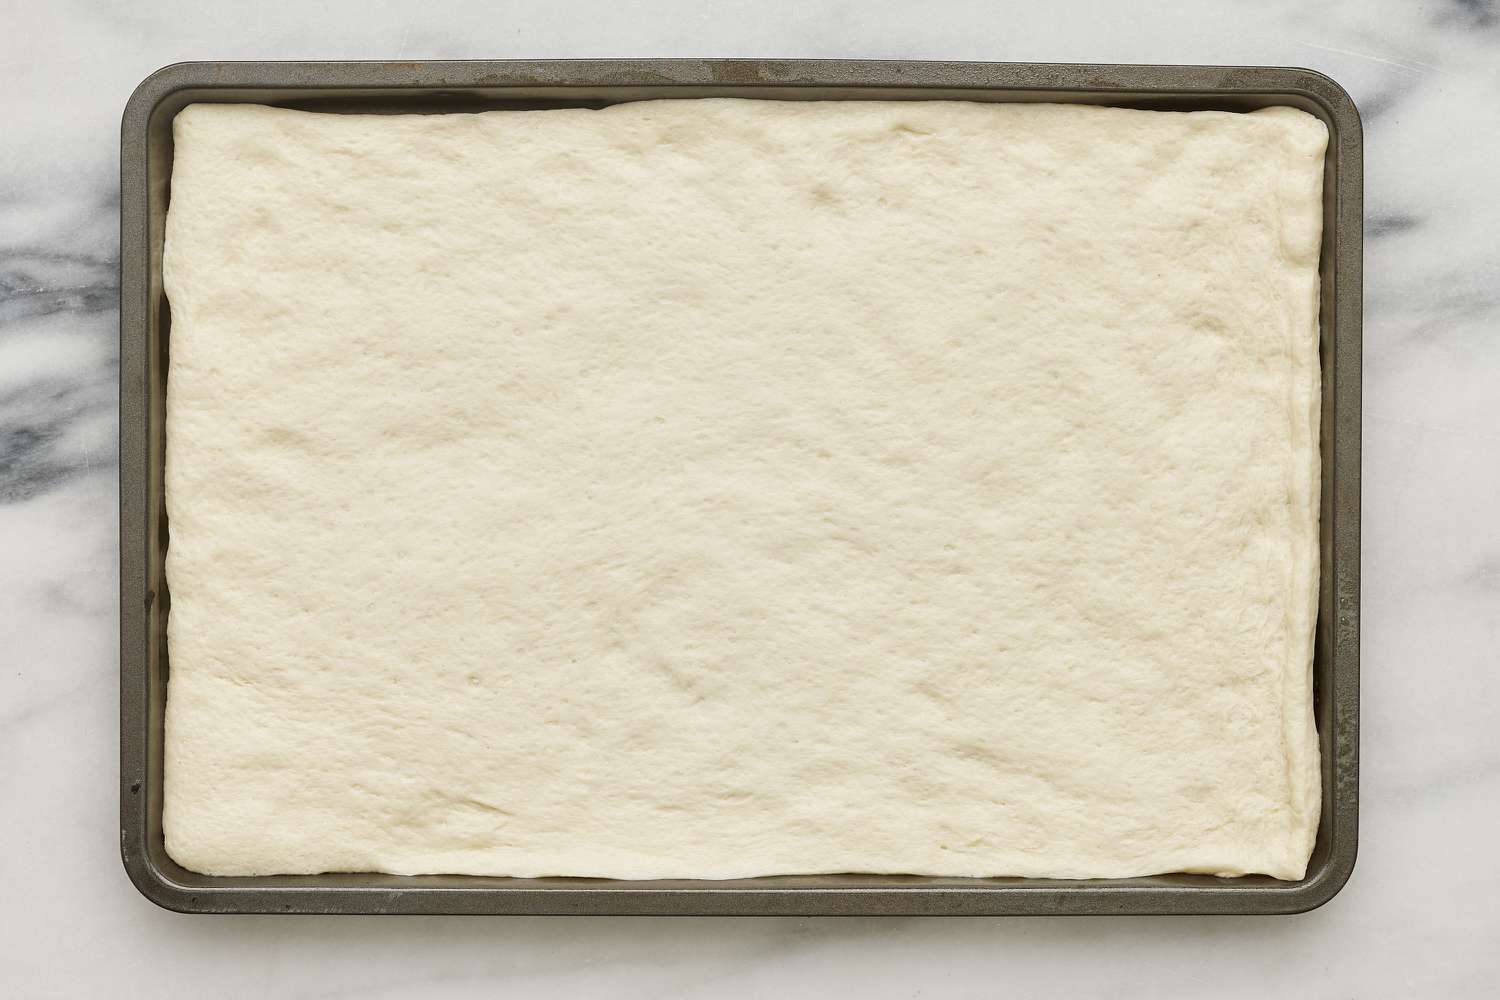 pizza dough unrolled onto baking sheet